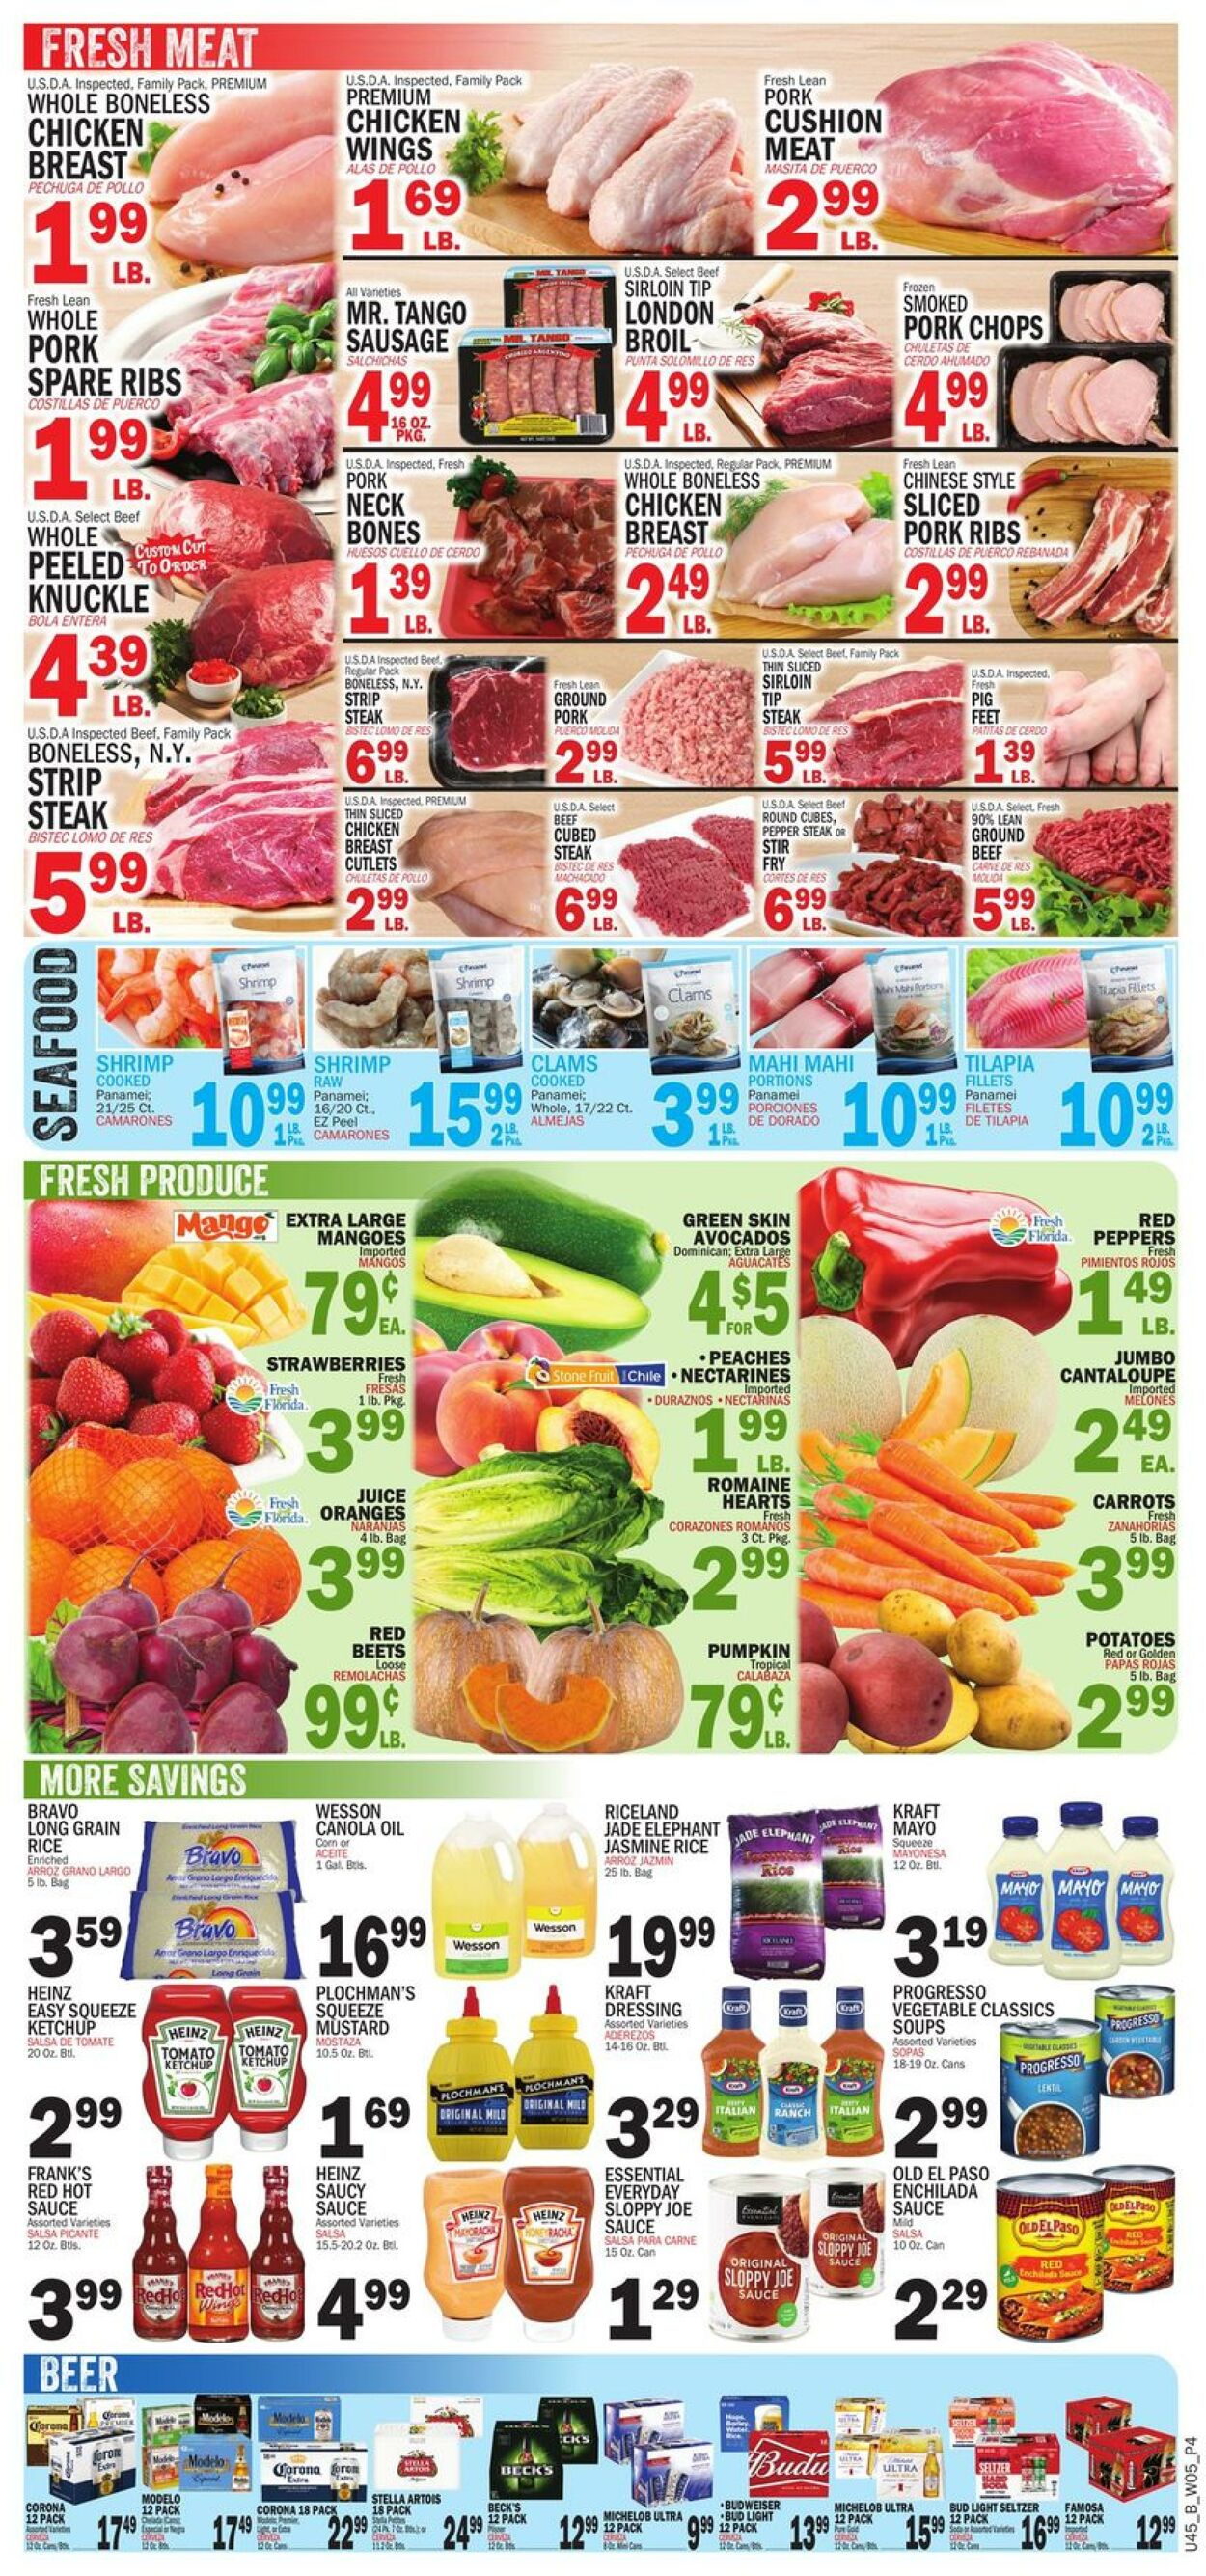 Weekly ad Bravo Supermarkets 01/26/2023 - 02/01/2023